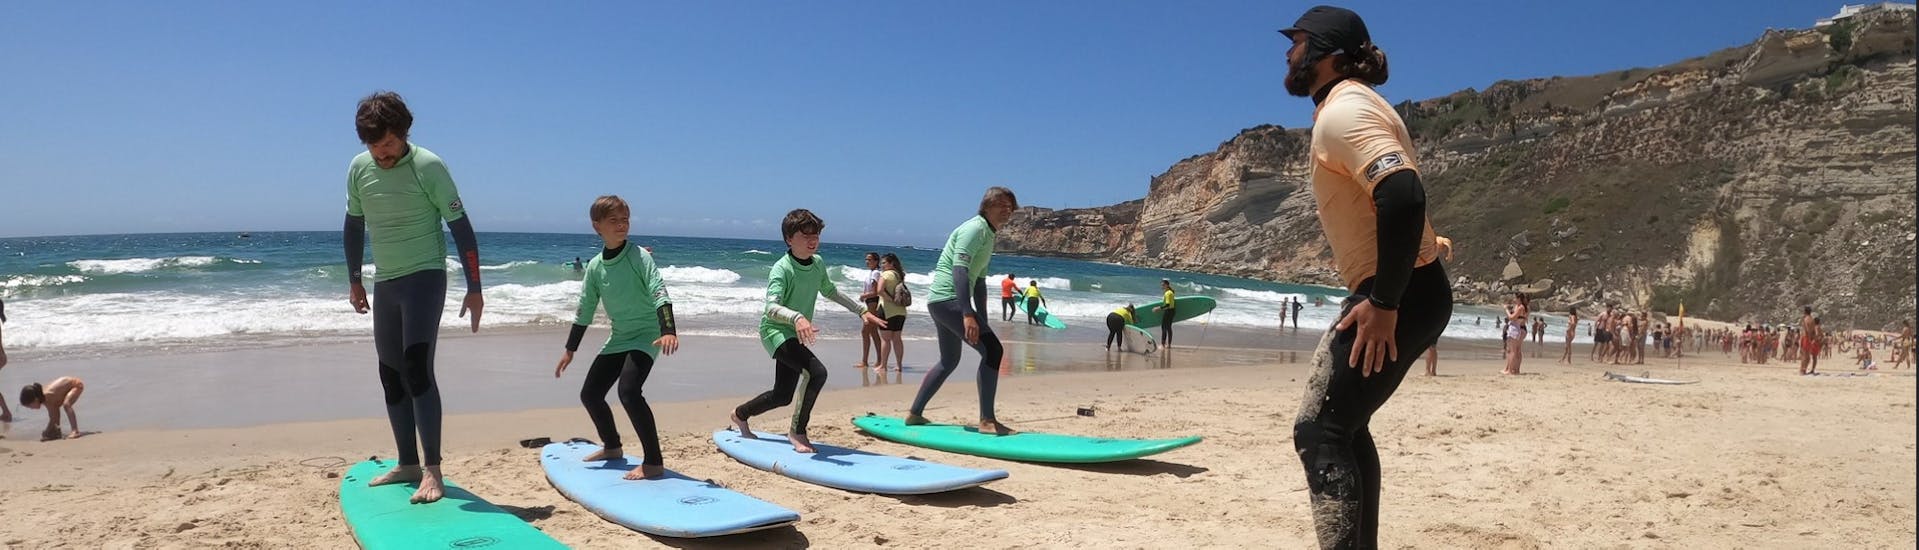 Lezioni di surf a Nazaré (dai 6 anni) per tutti i livelli.